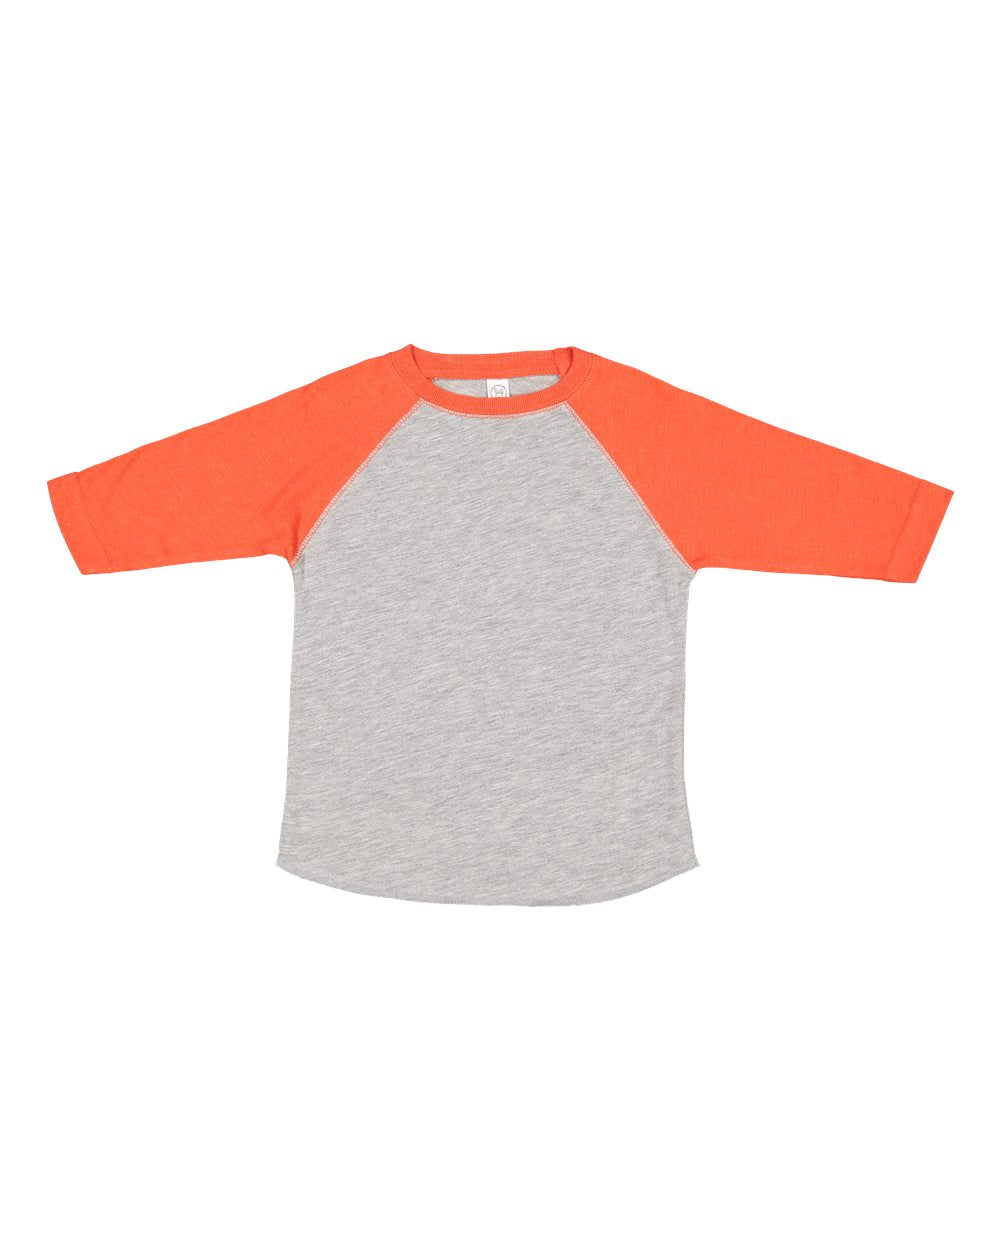 rabbit skins toddler baseball jersey tee vintage heather vintage orange